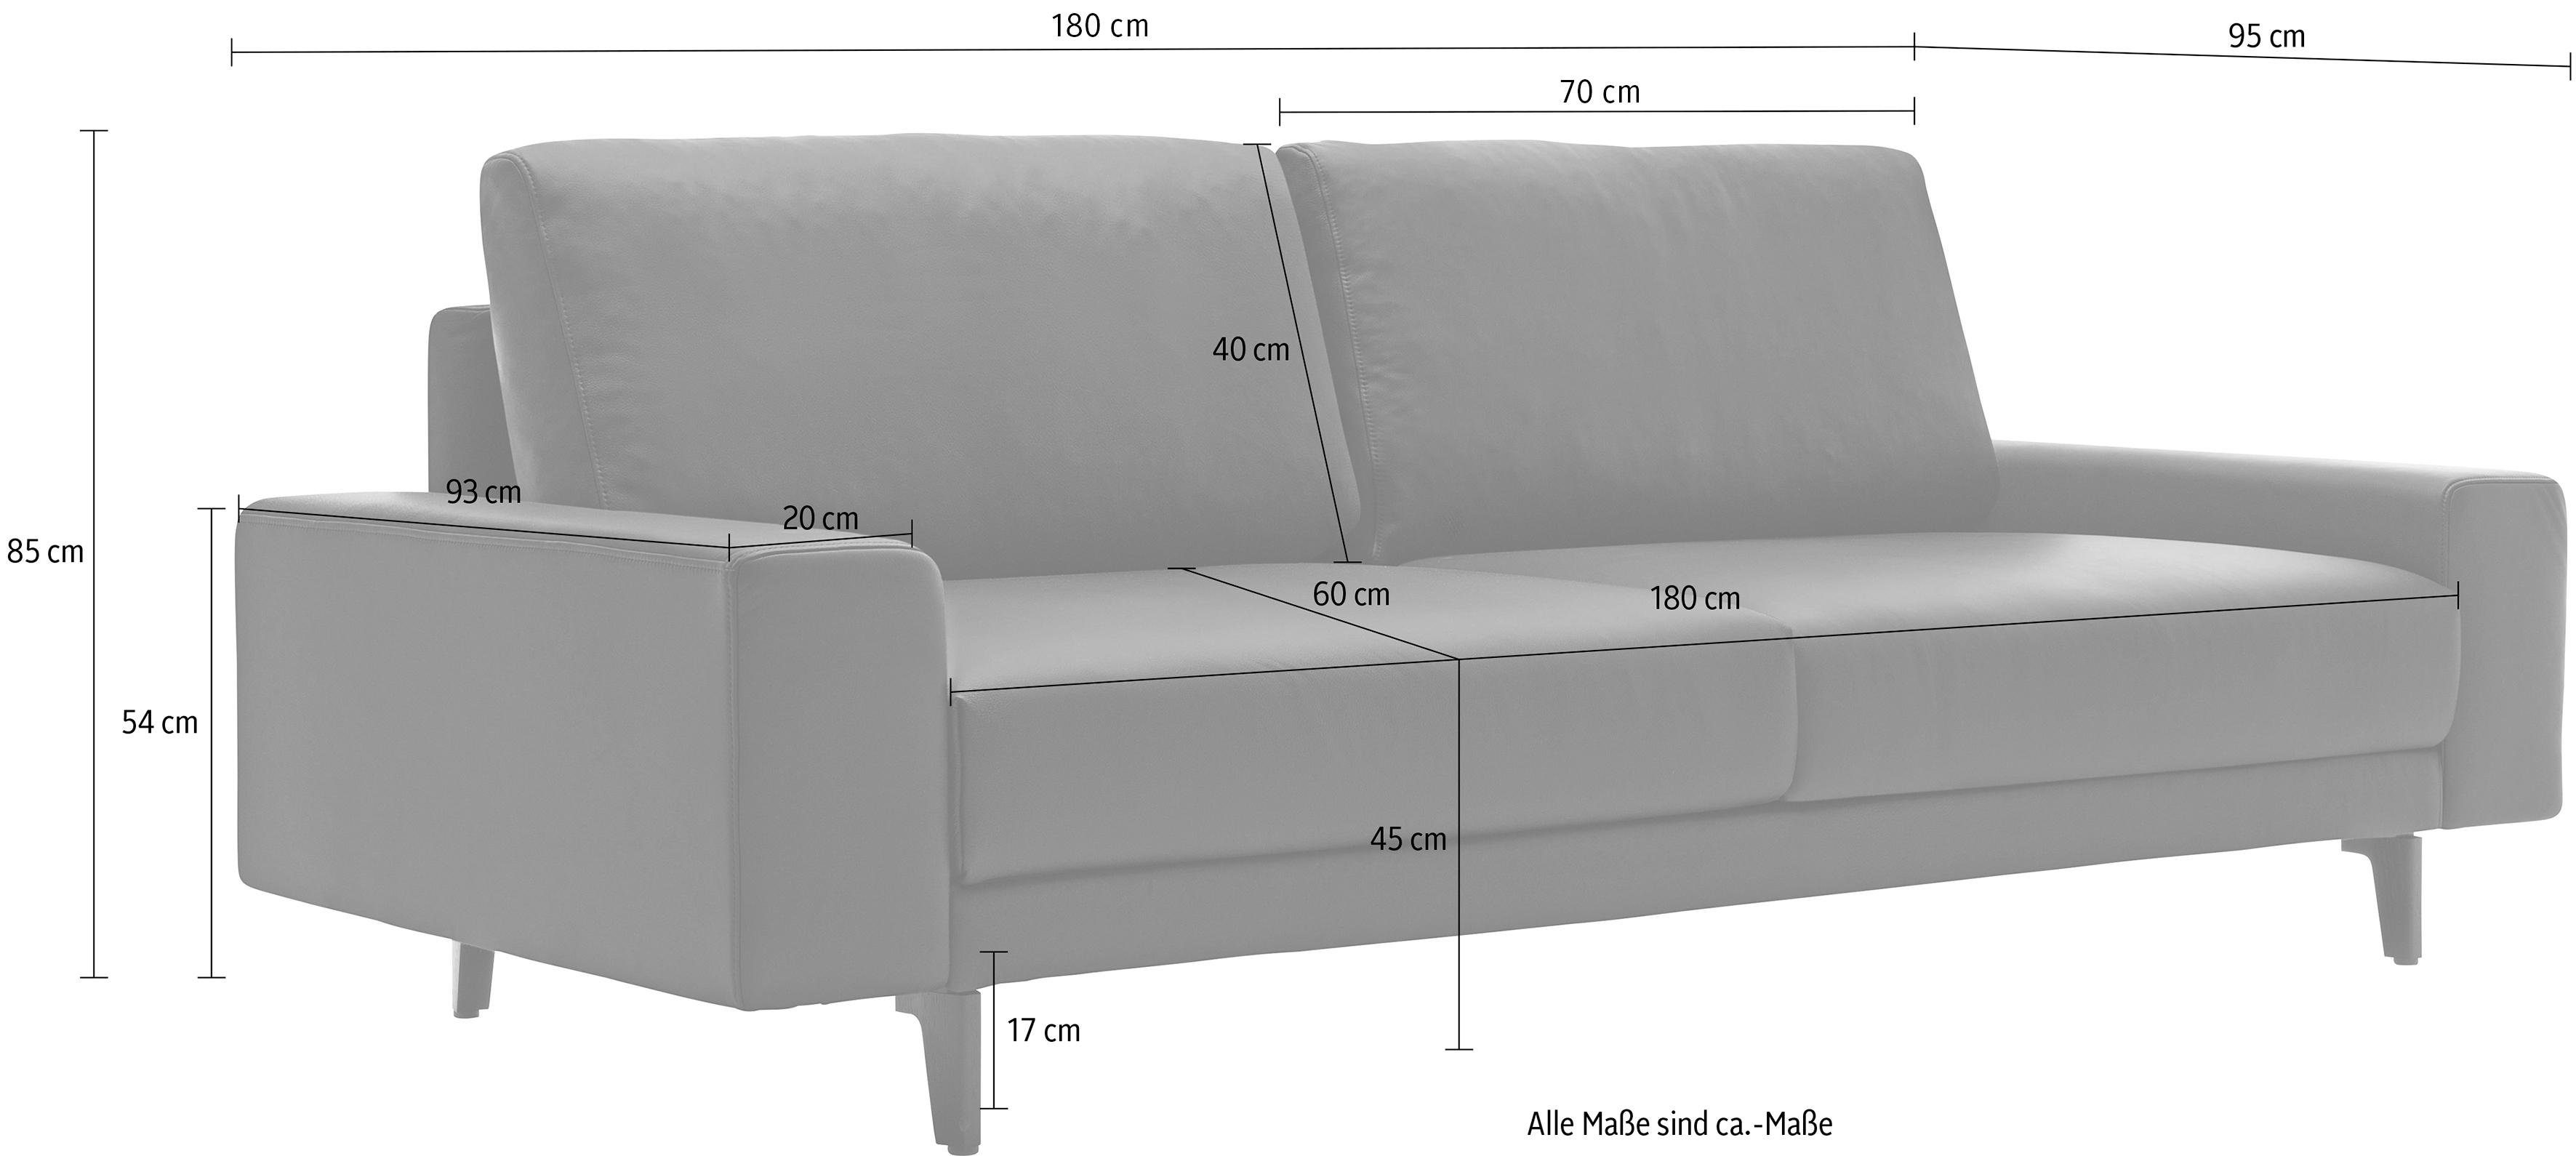 180 hülsta umbragrau, 2-Sitzer Armlehne Breite in hs.450, Alugussfüße breit niedrig, sofa cm